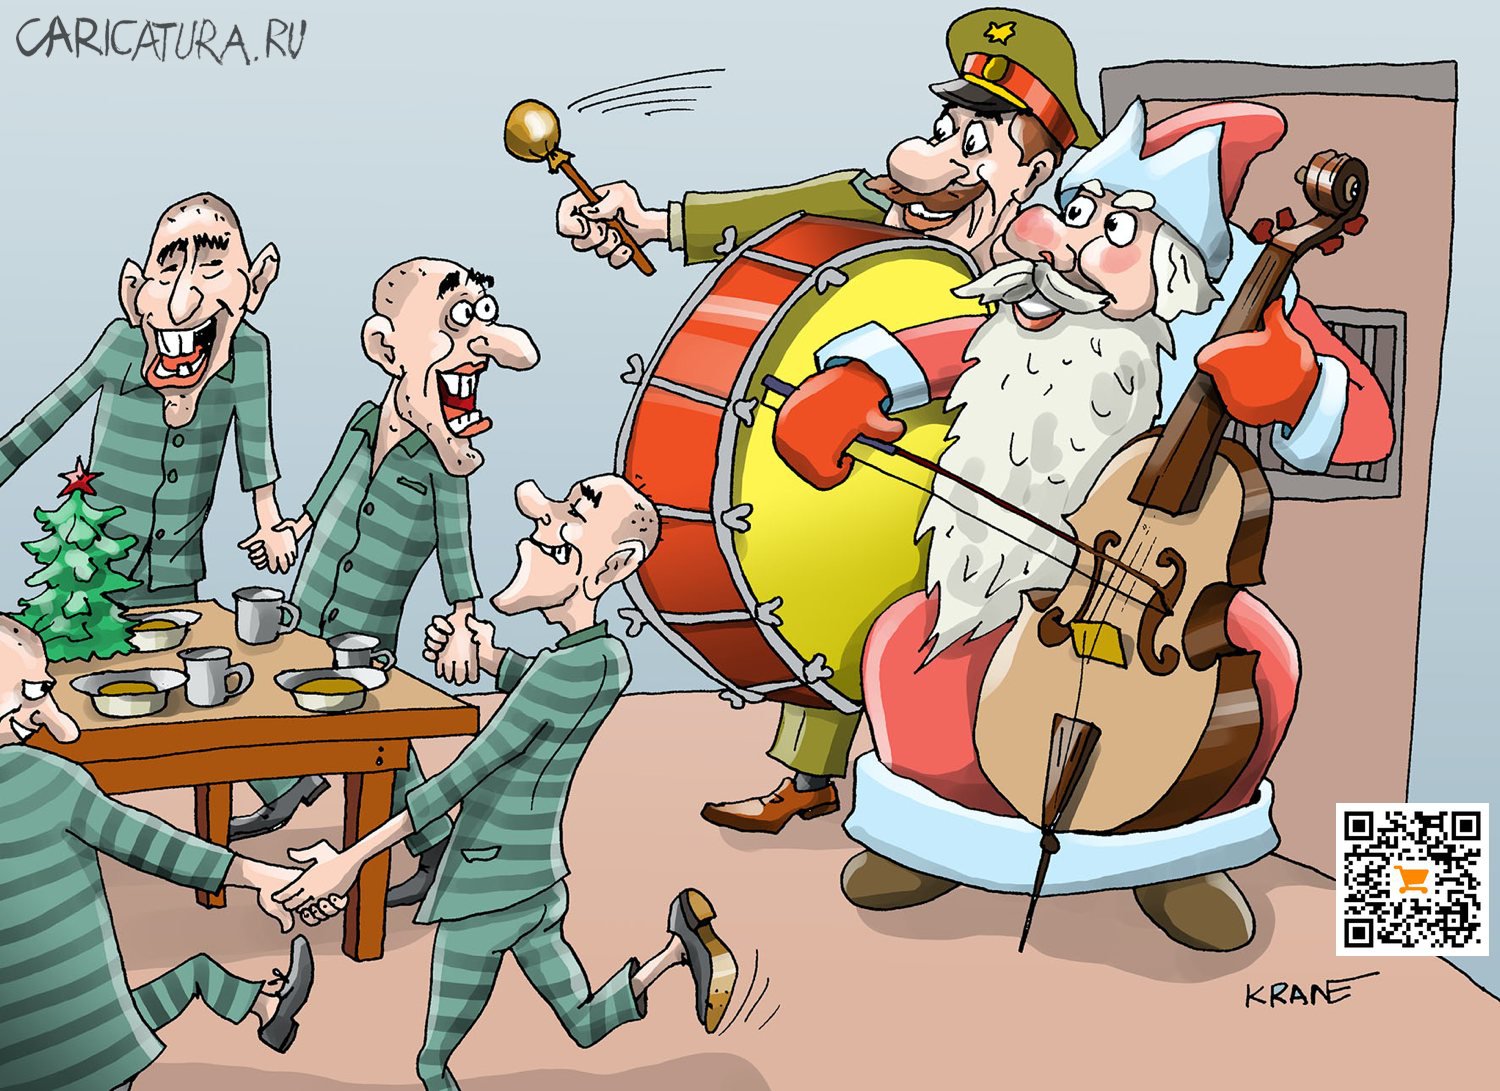 Карикатура "С красным носом", Евгений Кран